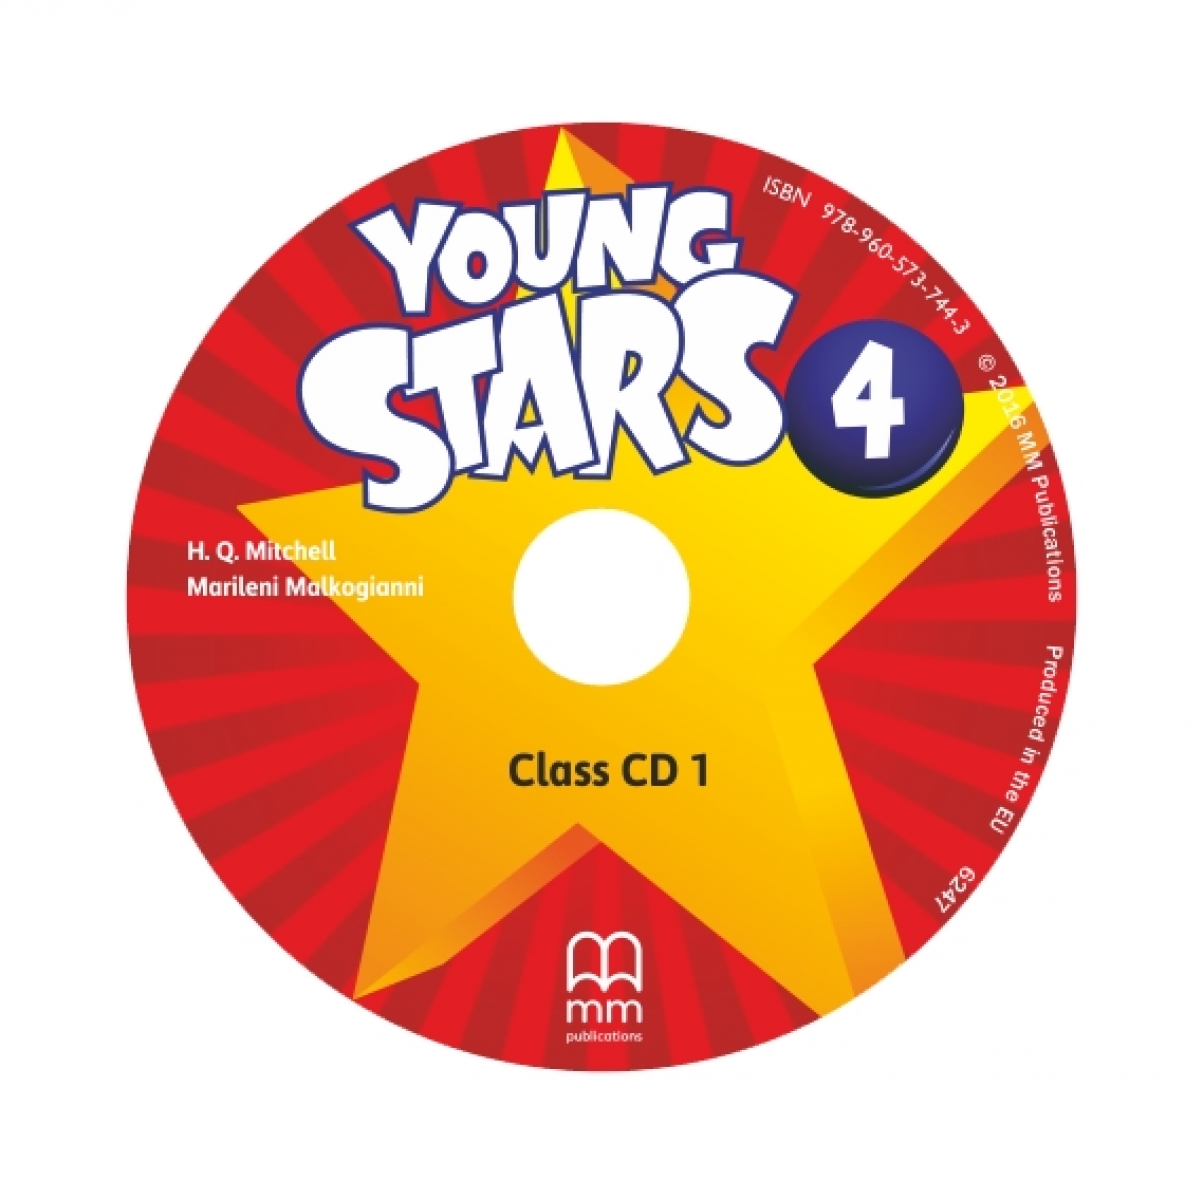 Marileni Malkogianni, H.Q.Mitchell Young Stars 4 Cl CD 